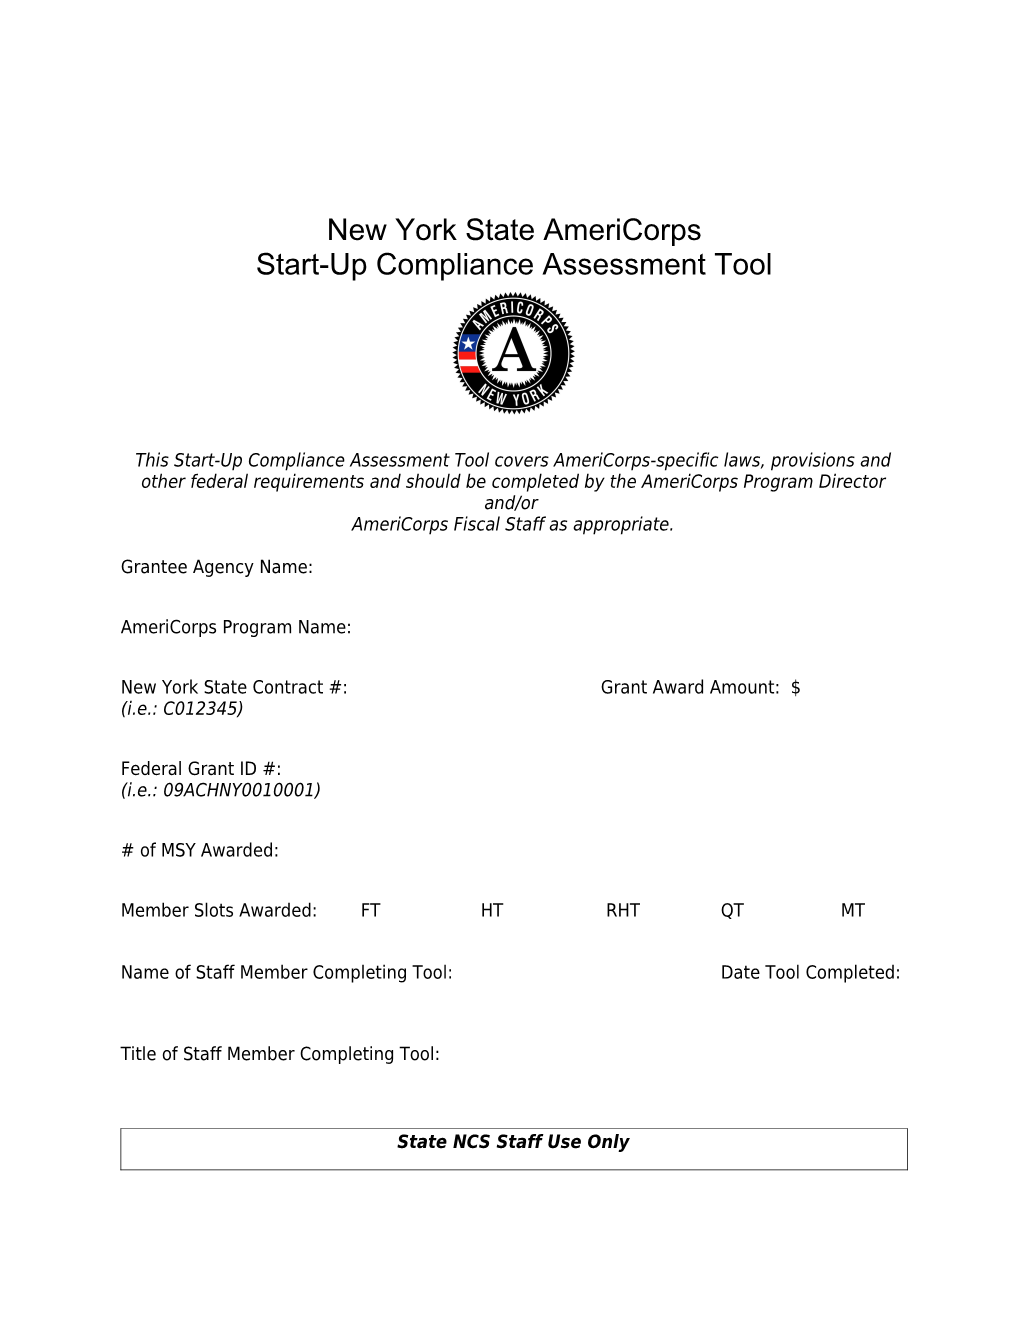 New York State Americorps